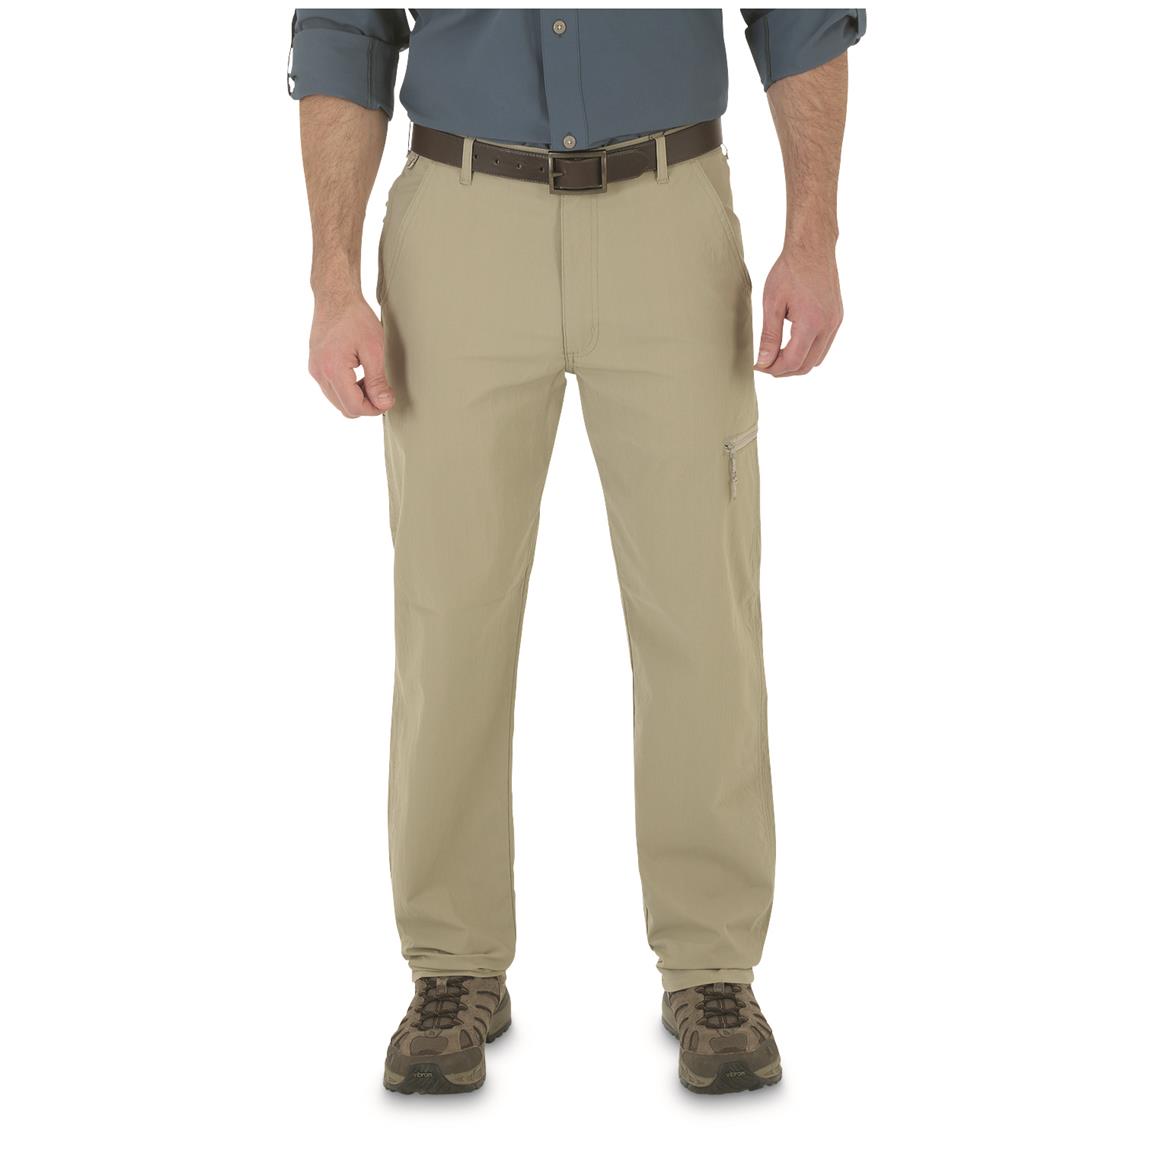 Wrangler Men's Linecaster Pants - 676410, Jeans & Pants at Sportsman's ...